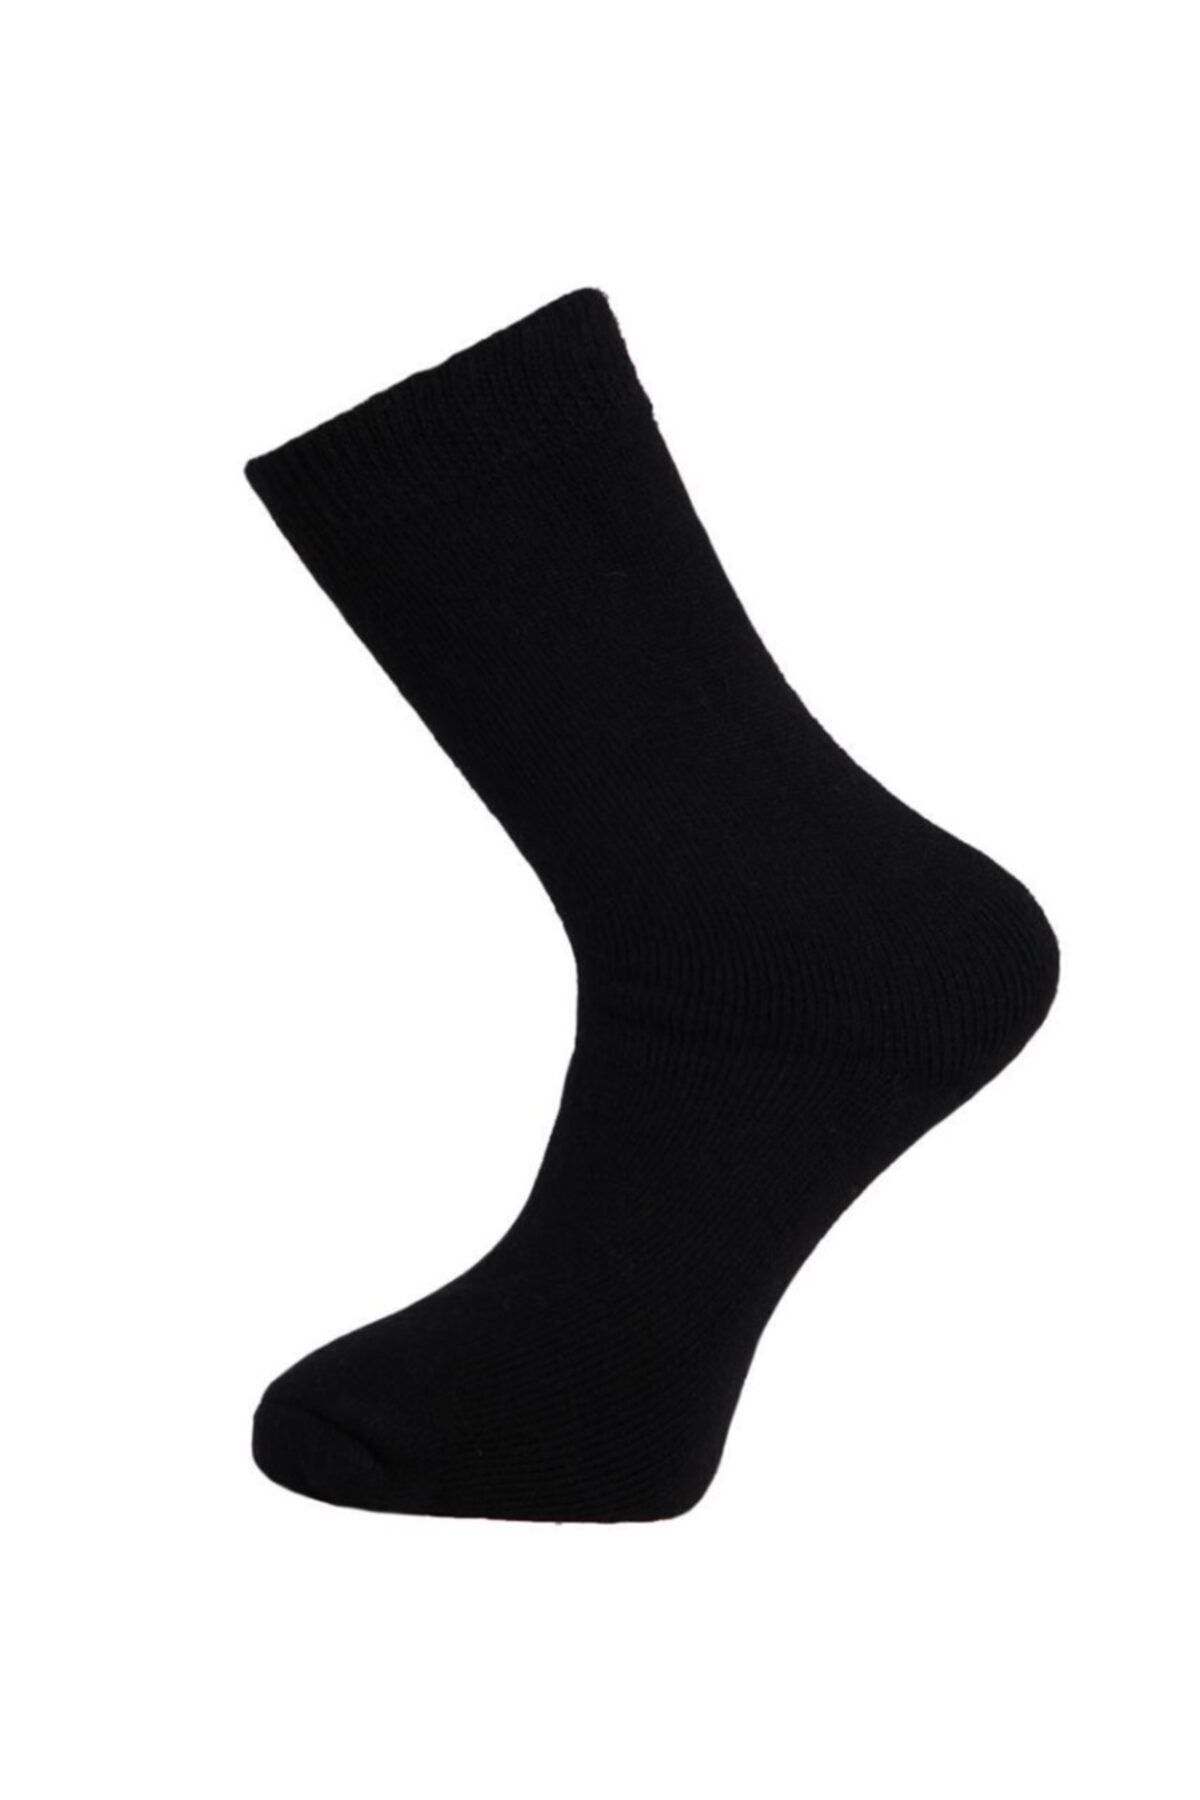 Panthzer Casual Wool Erkek Çorap Siyah